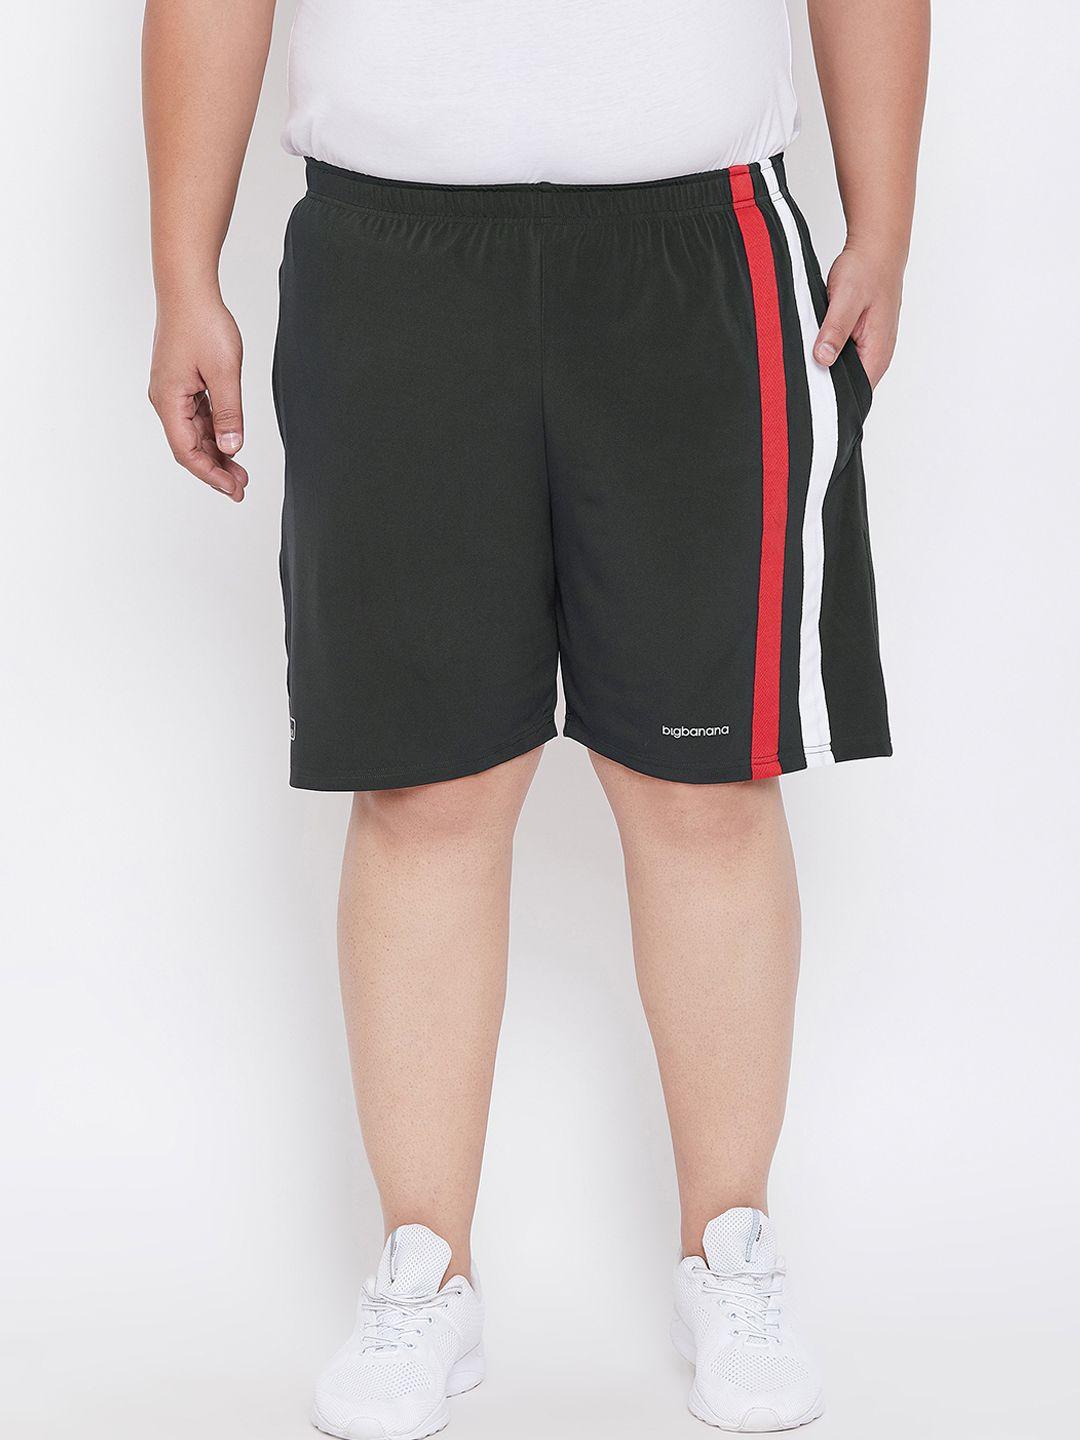 bigbanana plus size men black solid antimicrobial sports shorts